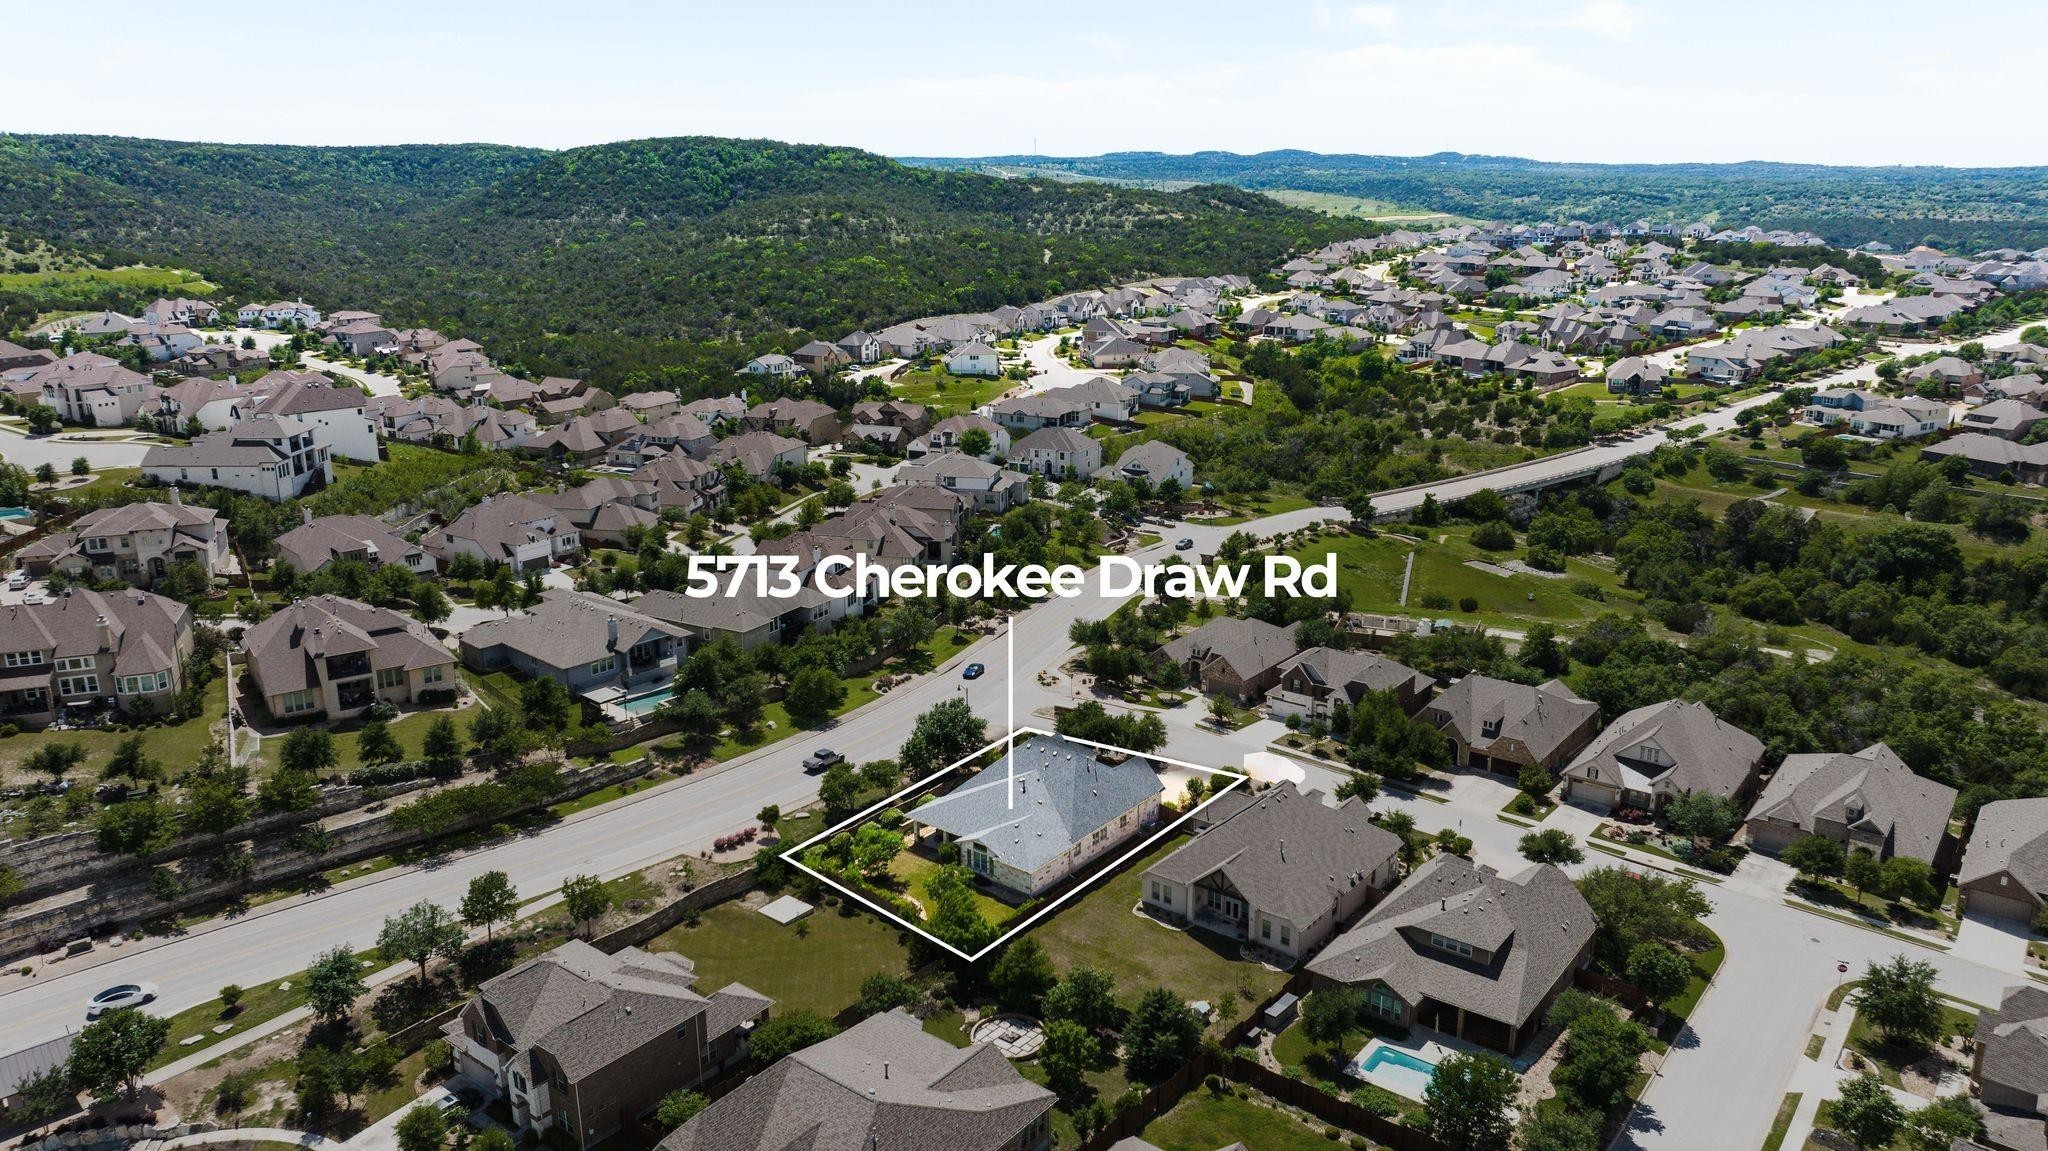 40. 5713 Cherokee Draw Rd